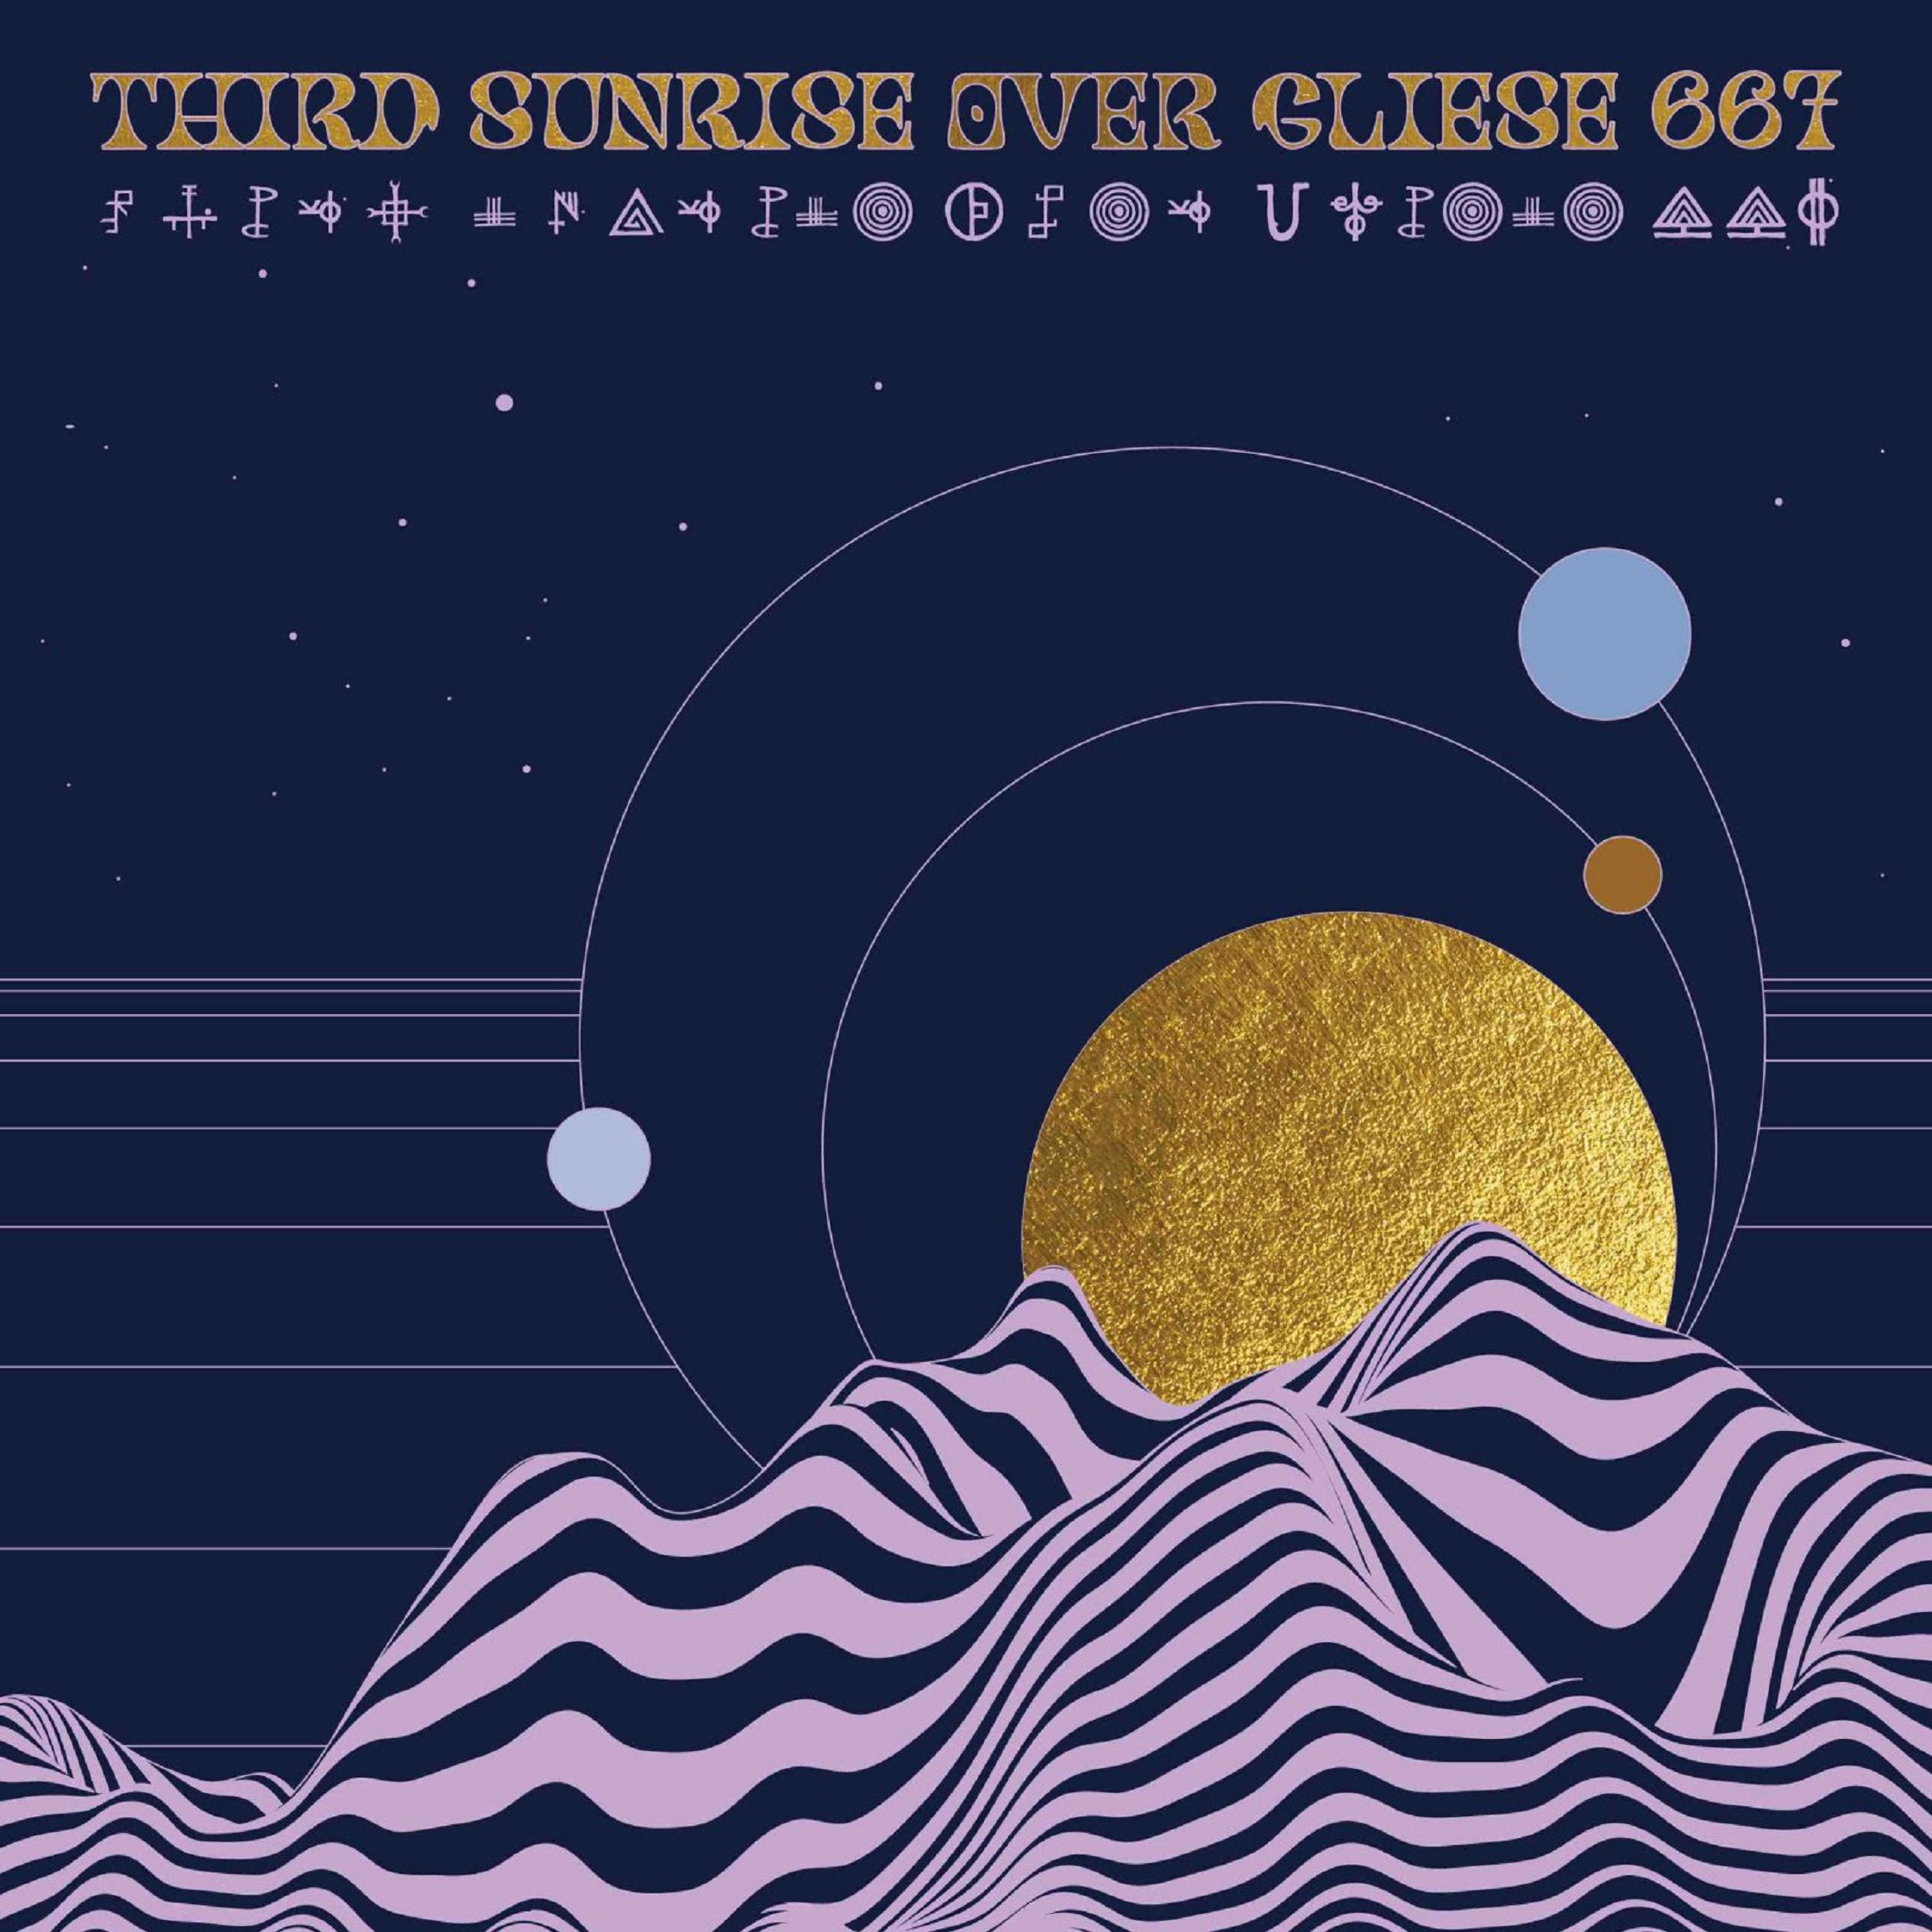 Circles Around The Sun Share New Single/Video "Third Sunrise Over Gliese 667"